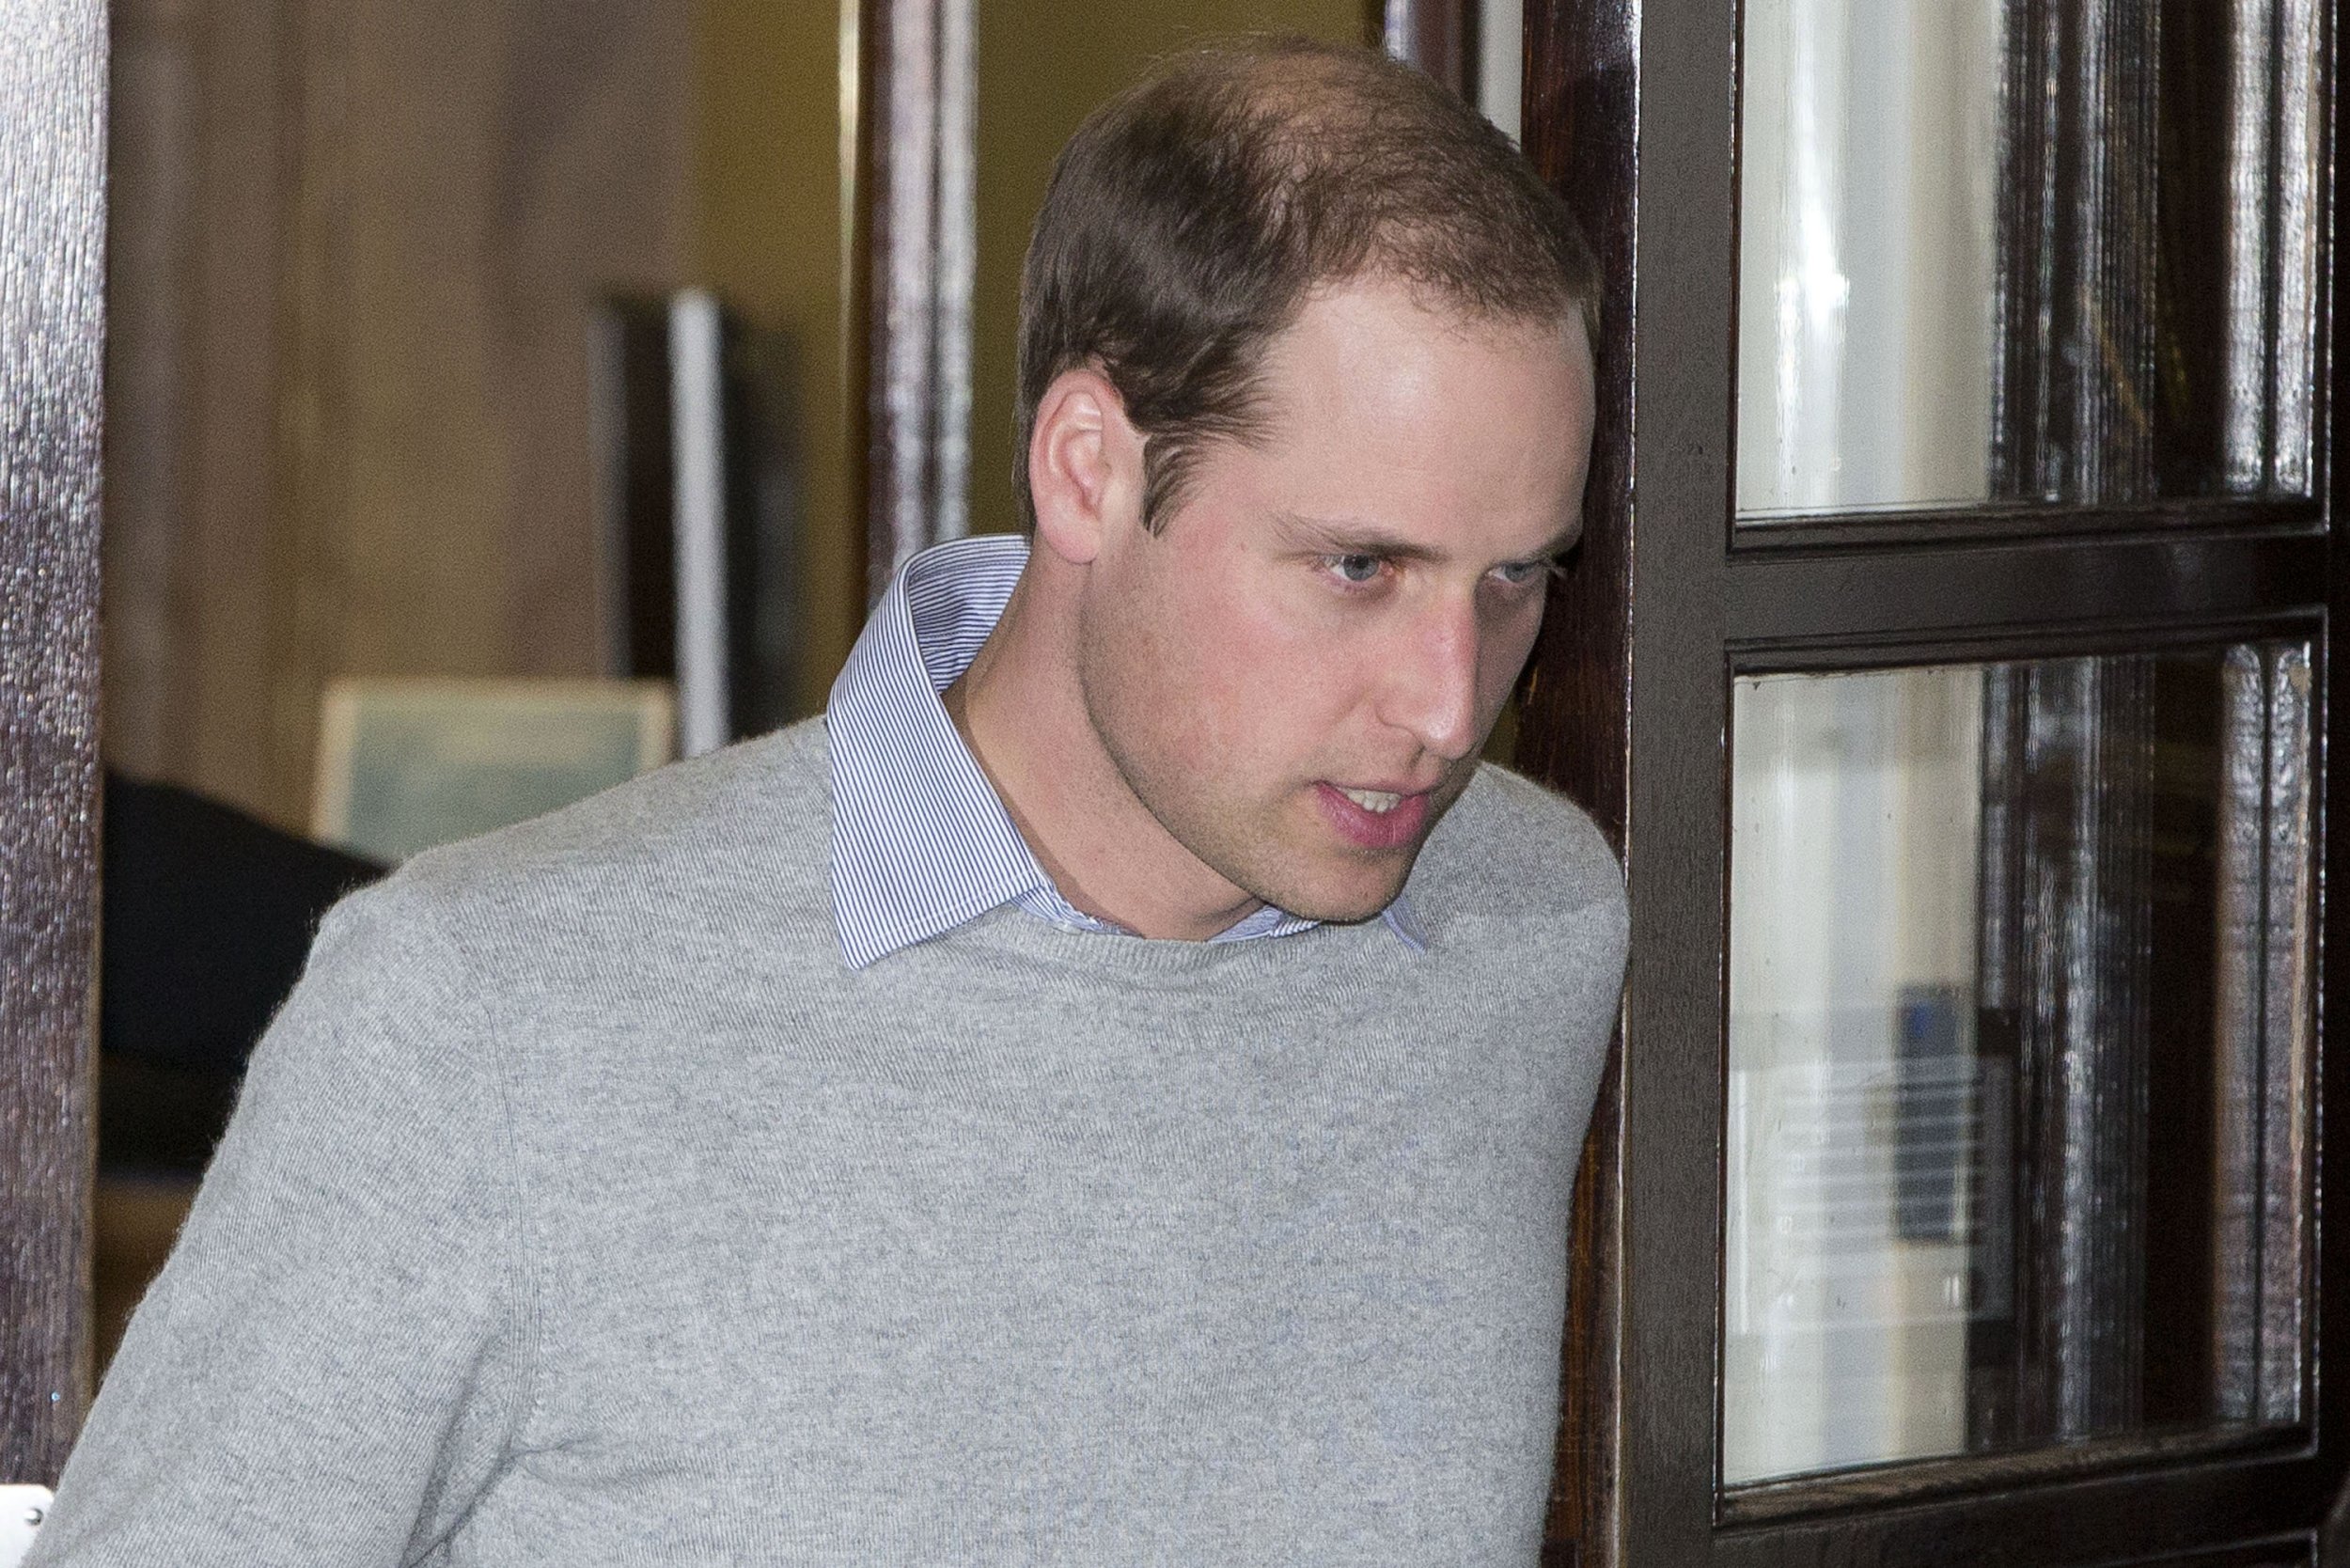 Prince William visiting Kate Middleton in hospital